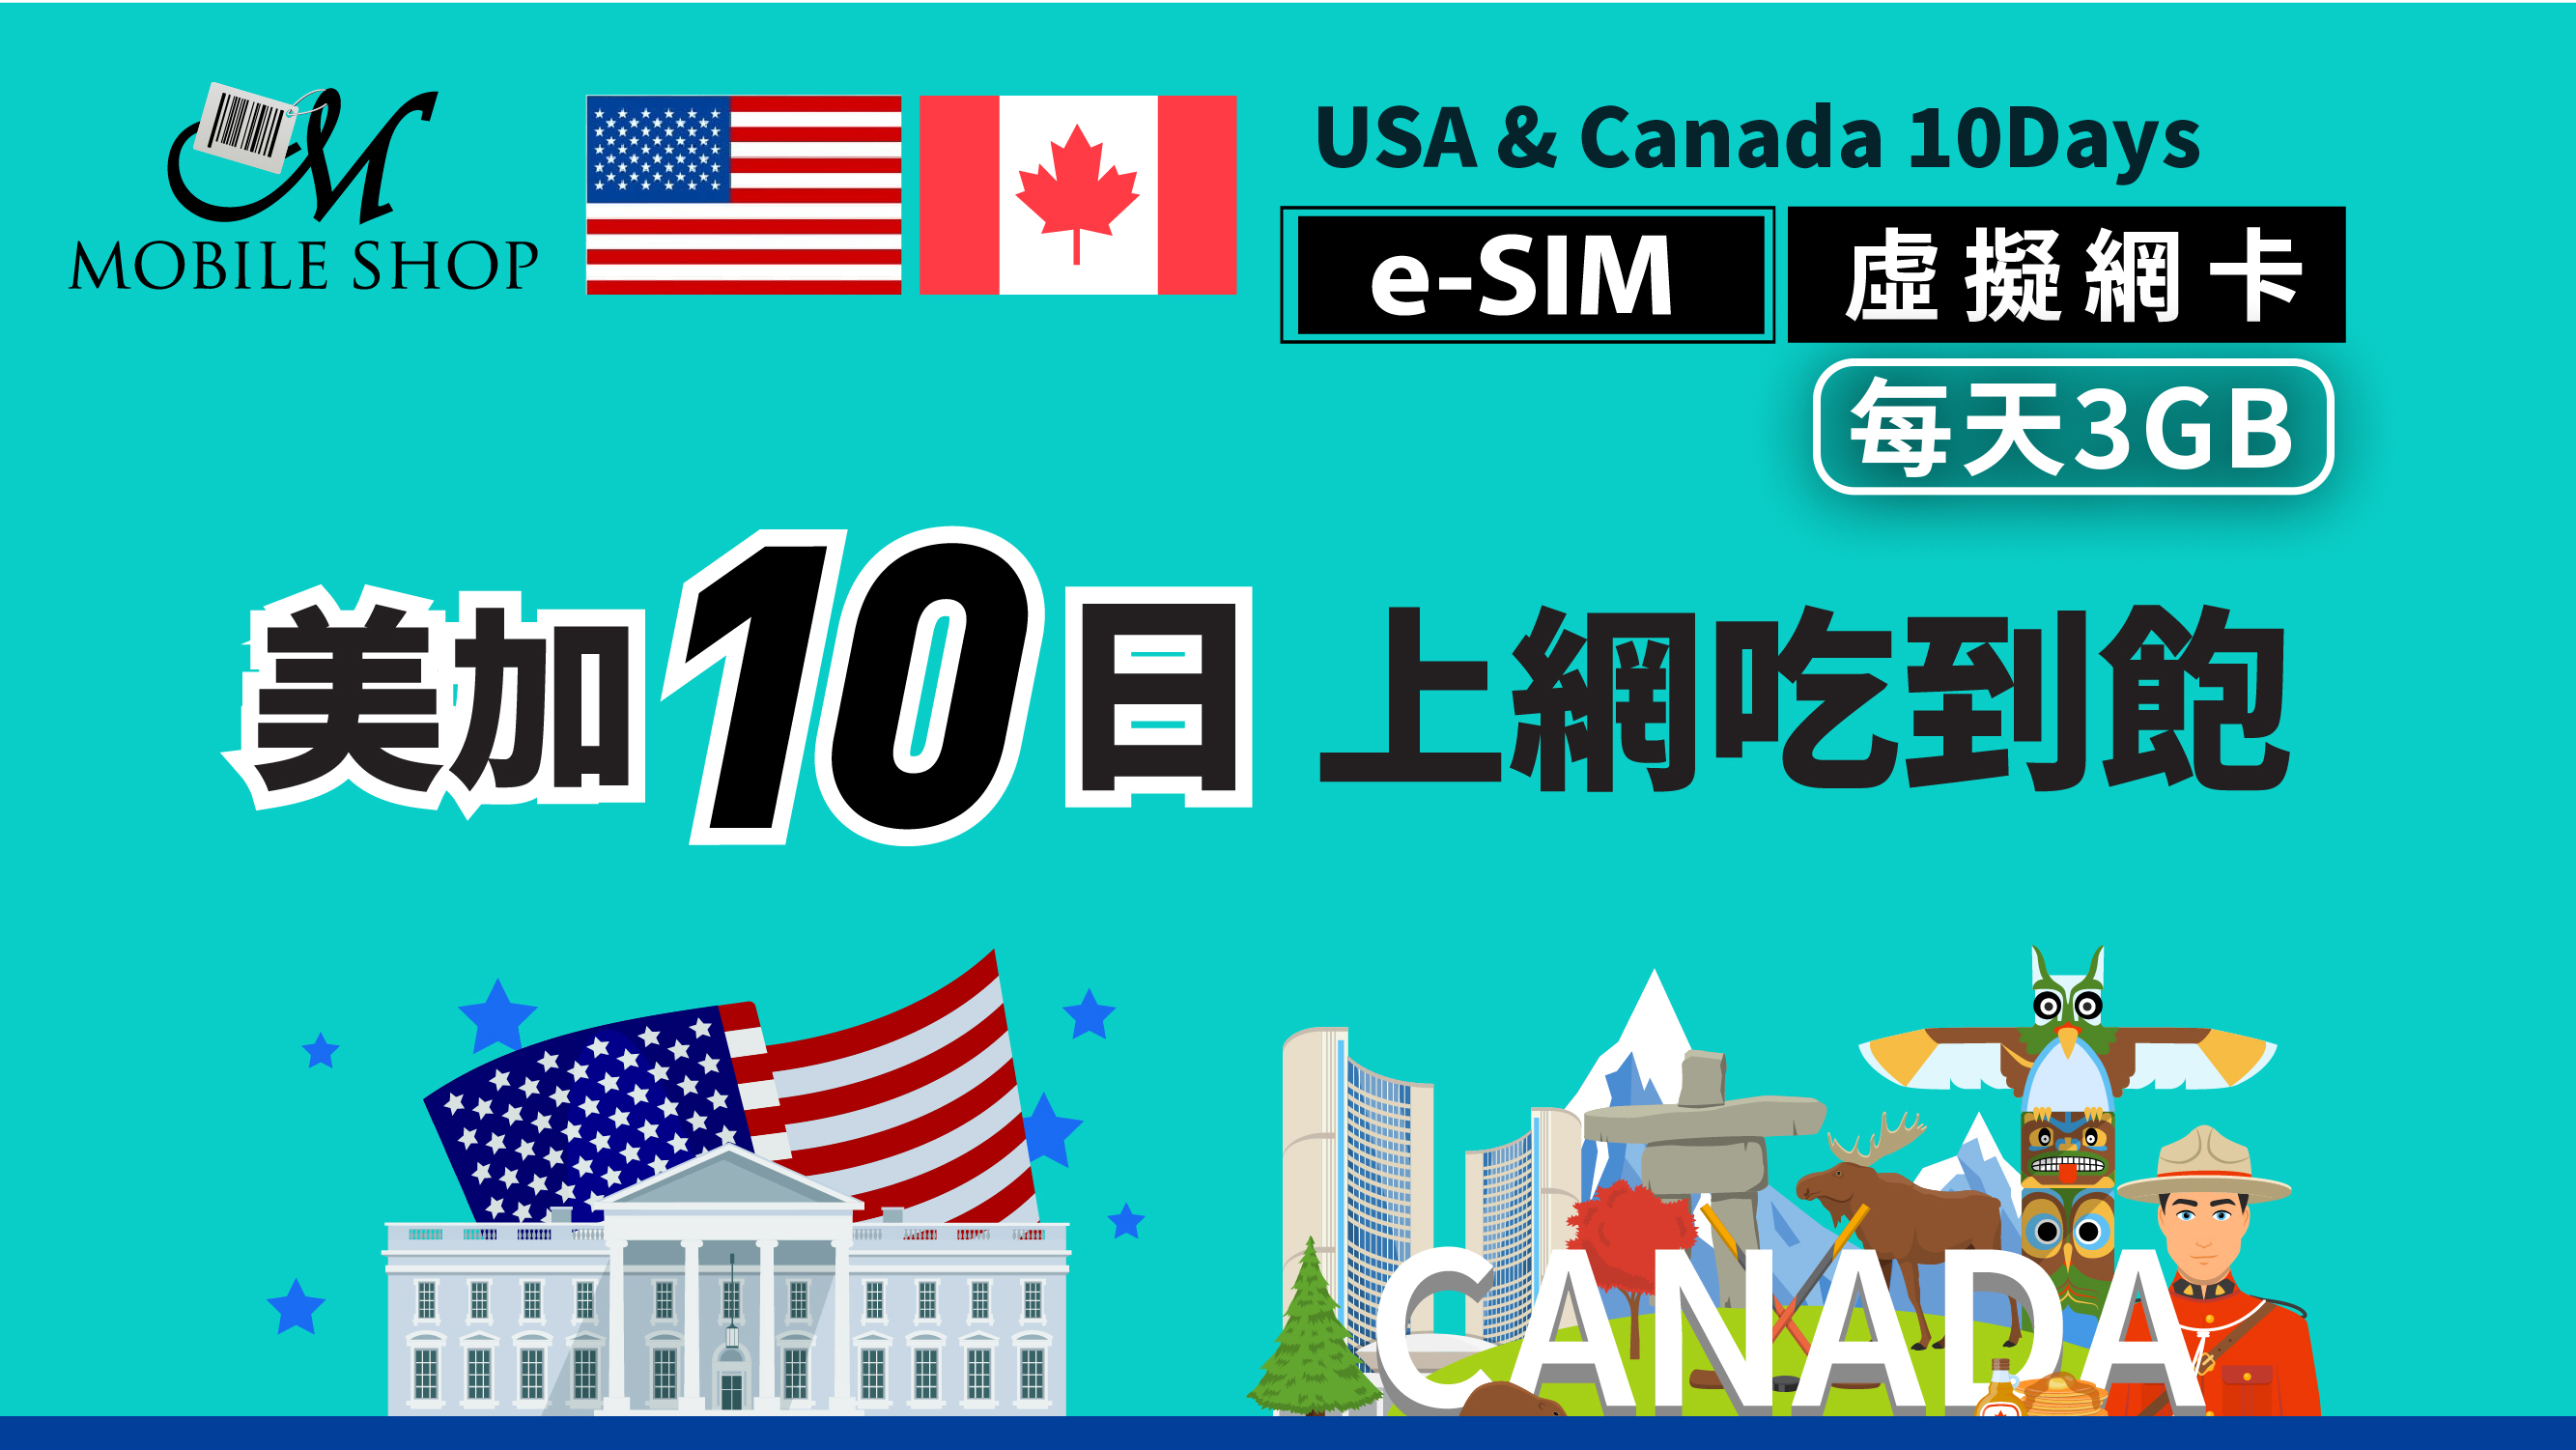 e-SIM_U.S./Canada 10 days/3GB per day unlimited data